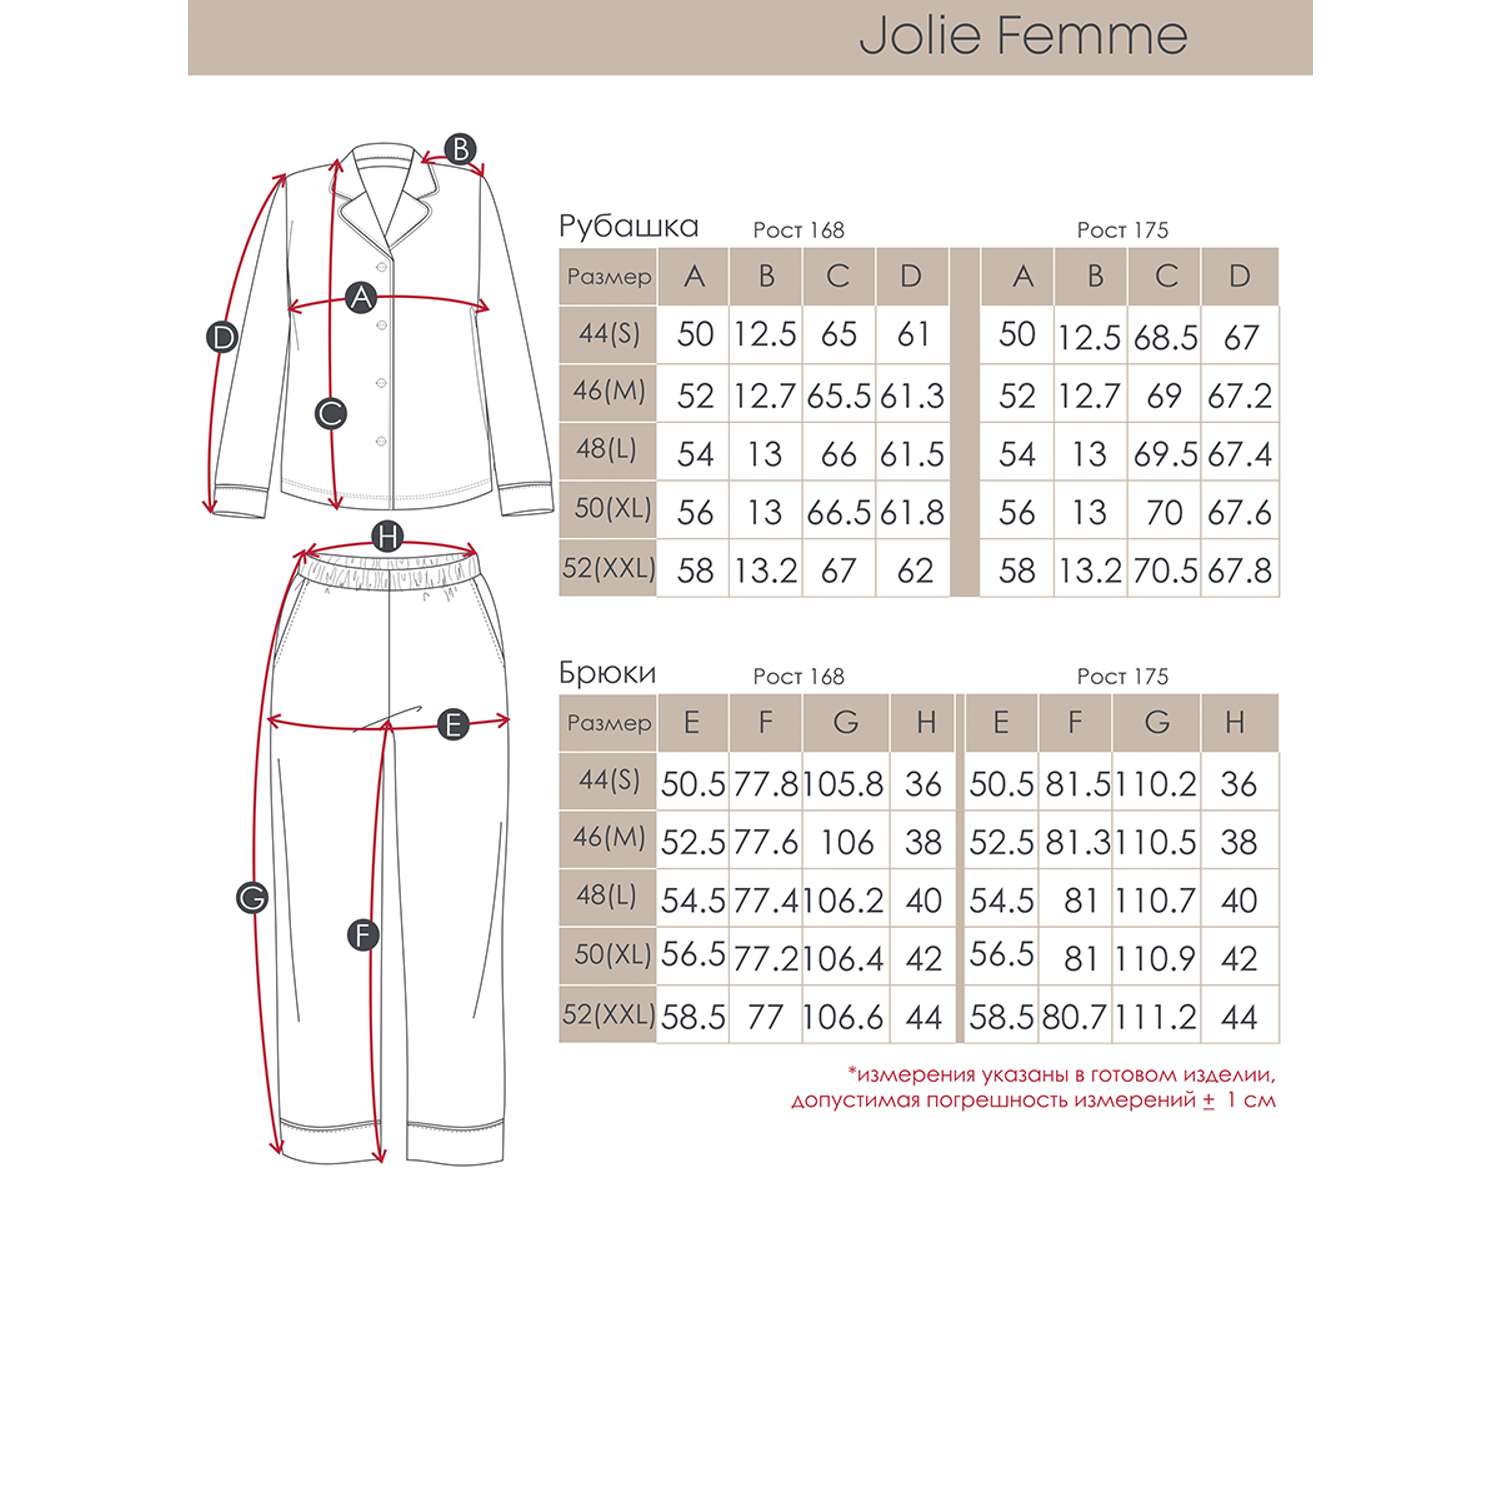 Пижама Jolie Femme J266/233/kau - фото 12